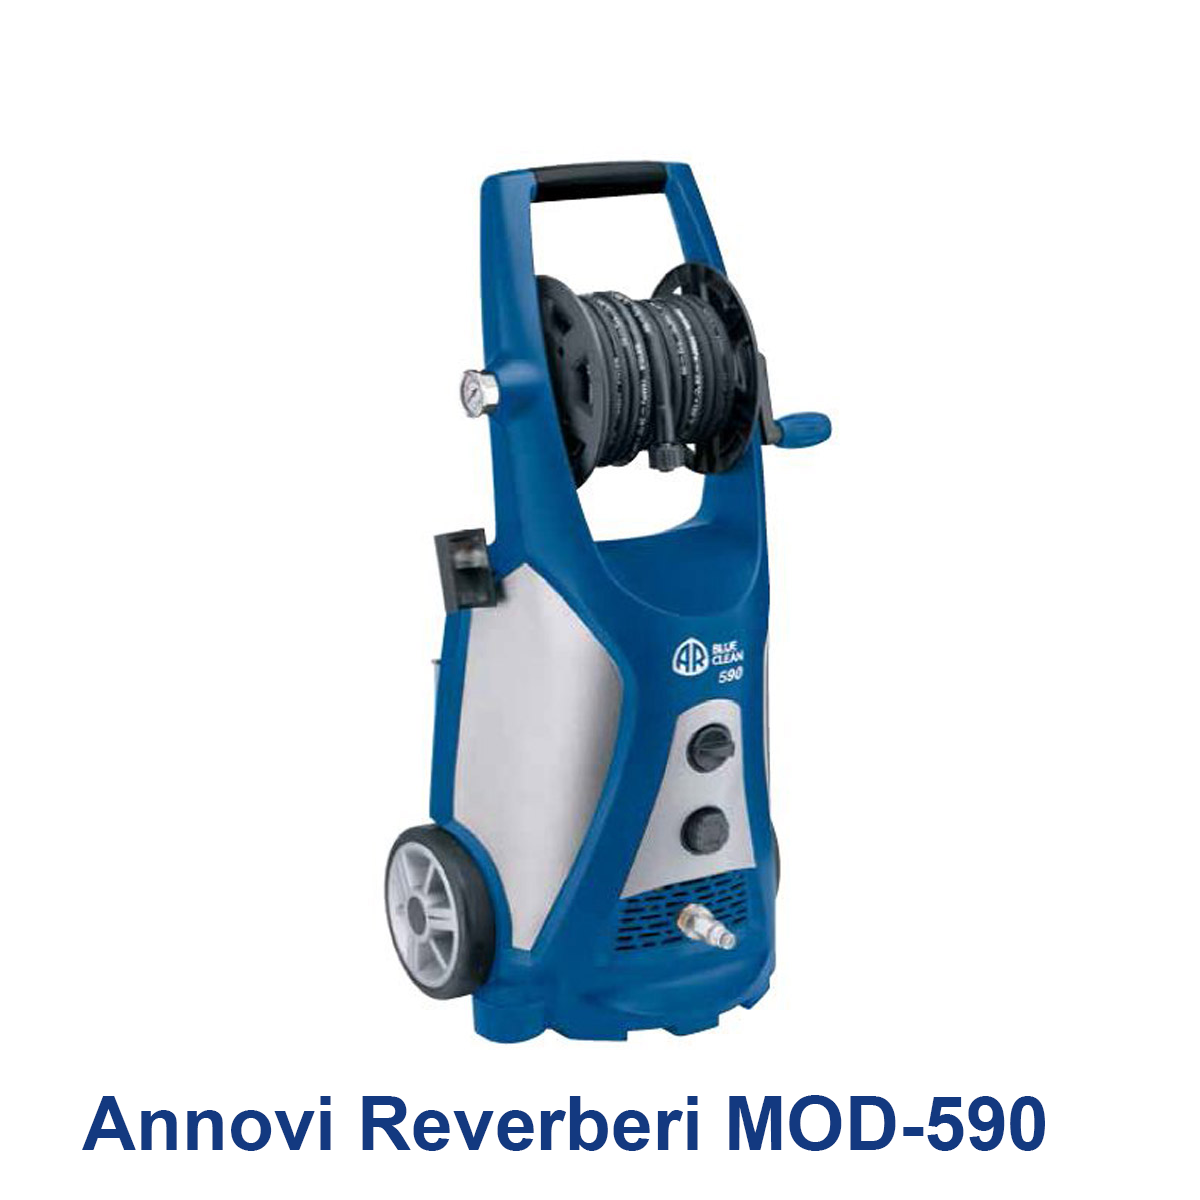 Annovi-Reverberi-MOD-590